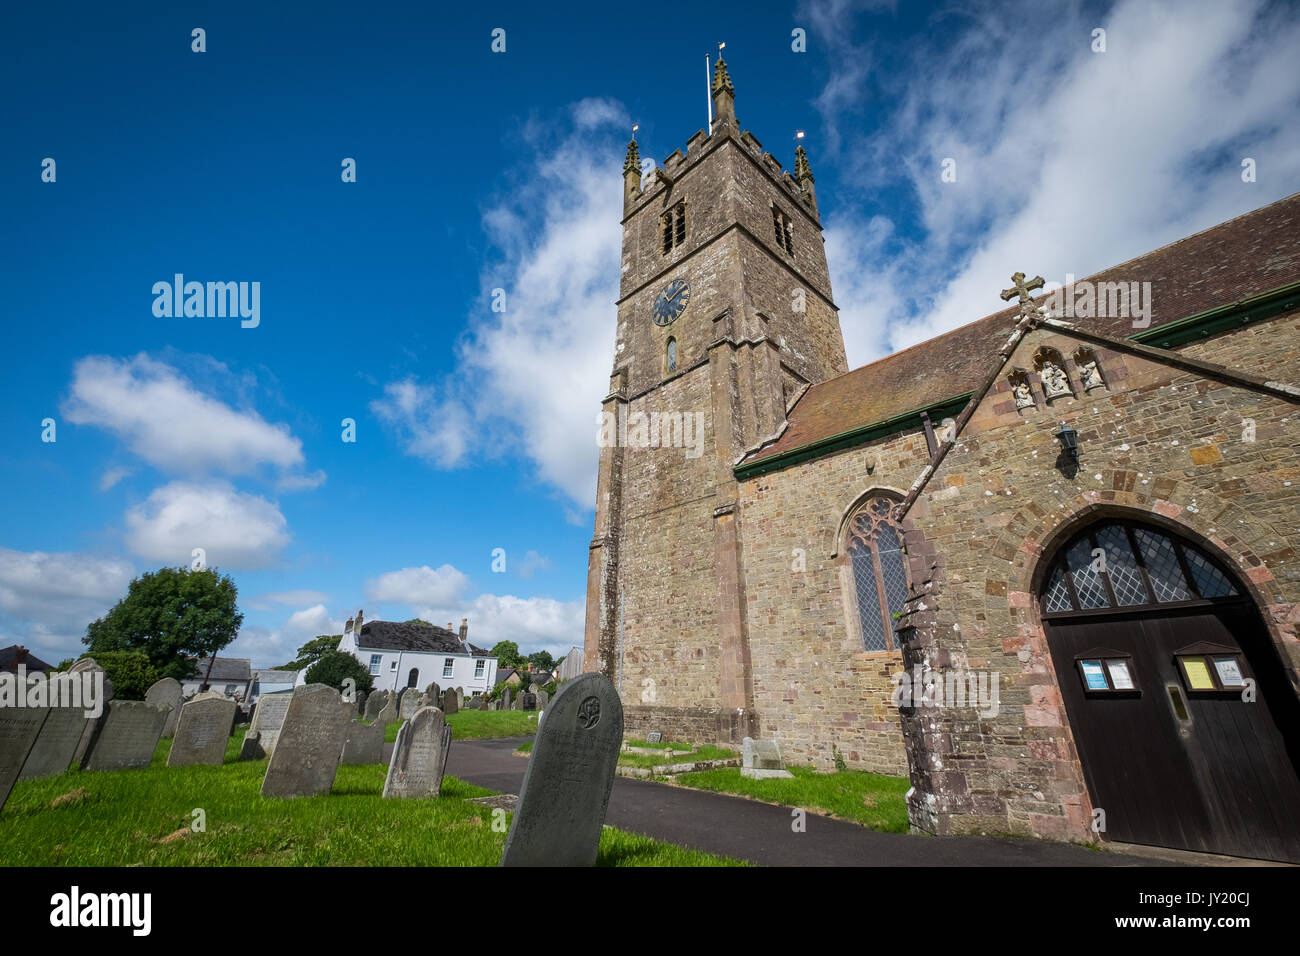 All Saints Church, Village Winkleigh, Devon, UK Banque D'Images